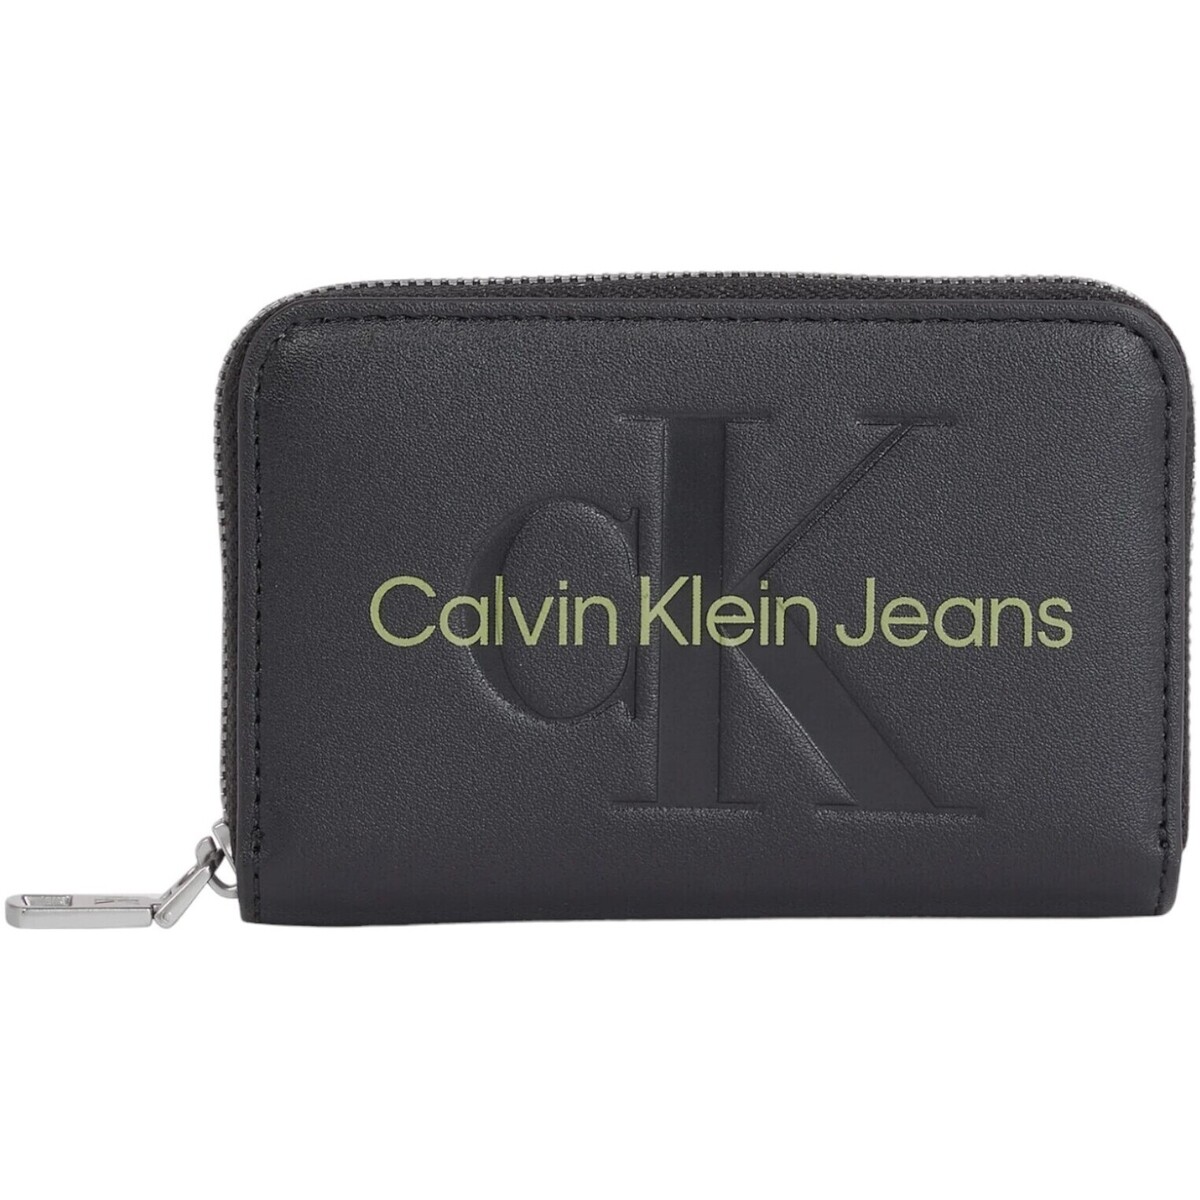 Sacs Femme Sacs Calvin Klein Jeans Portafoglio Donna Black K60K607229 Noir